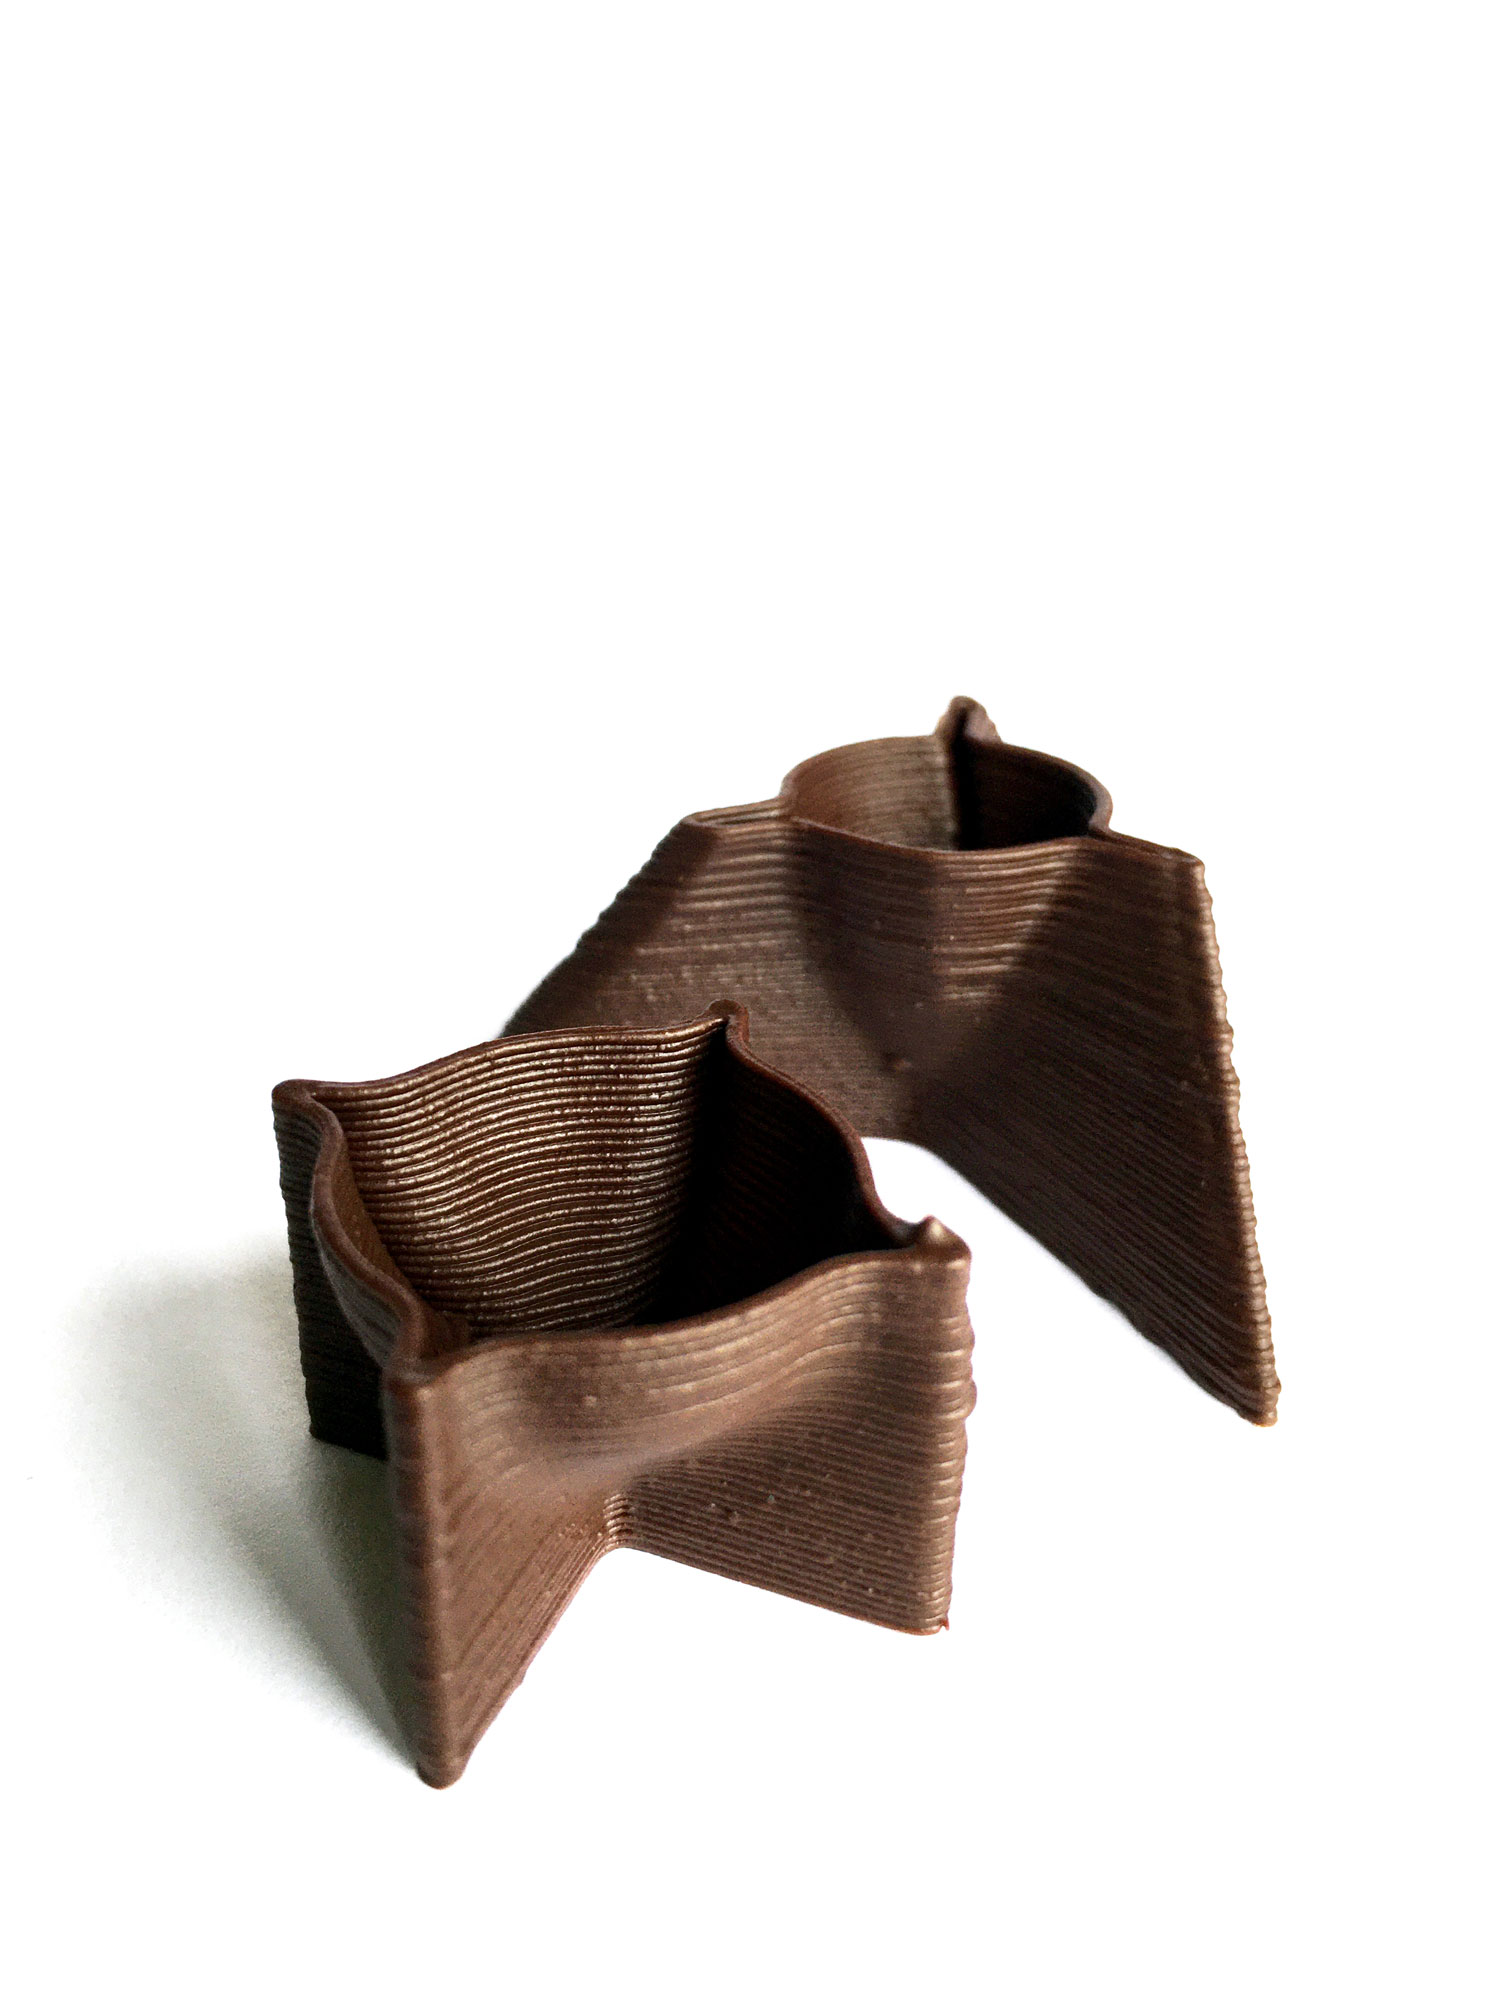 More than shape - Chocolat, impression 3D - Installation (More than shape Full Show) : 100 x 200 x 4 cm, chocolats : dimensions variables - 2020